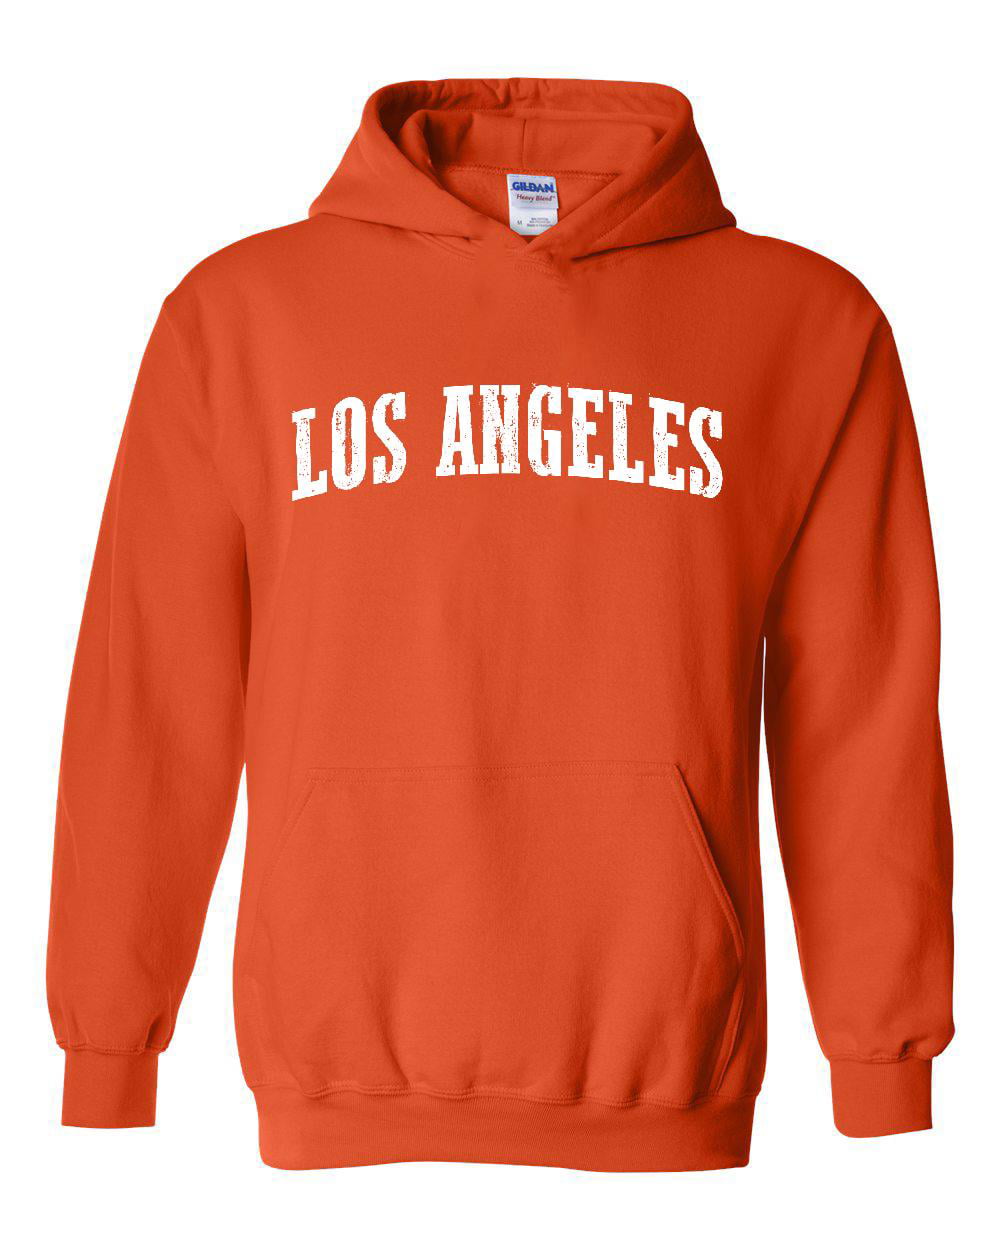 Artix - Women Sweatshirts and Hoodies - Los Angeles - Walmart.com